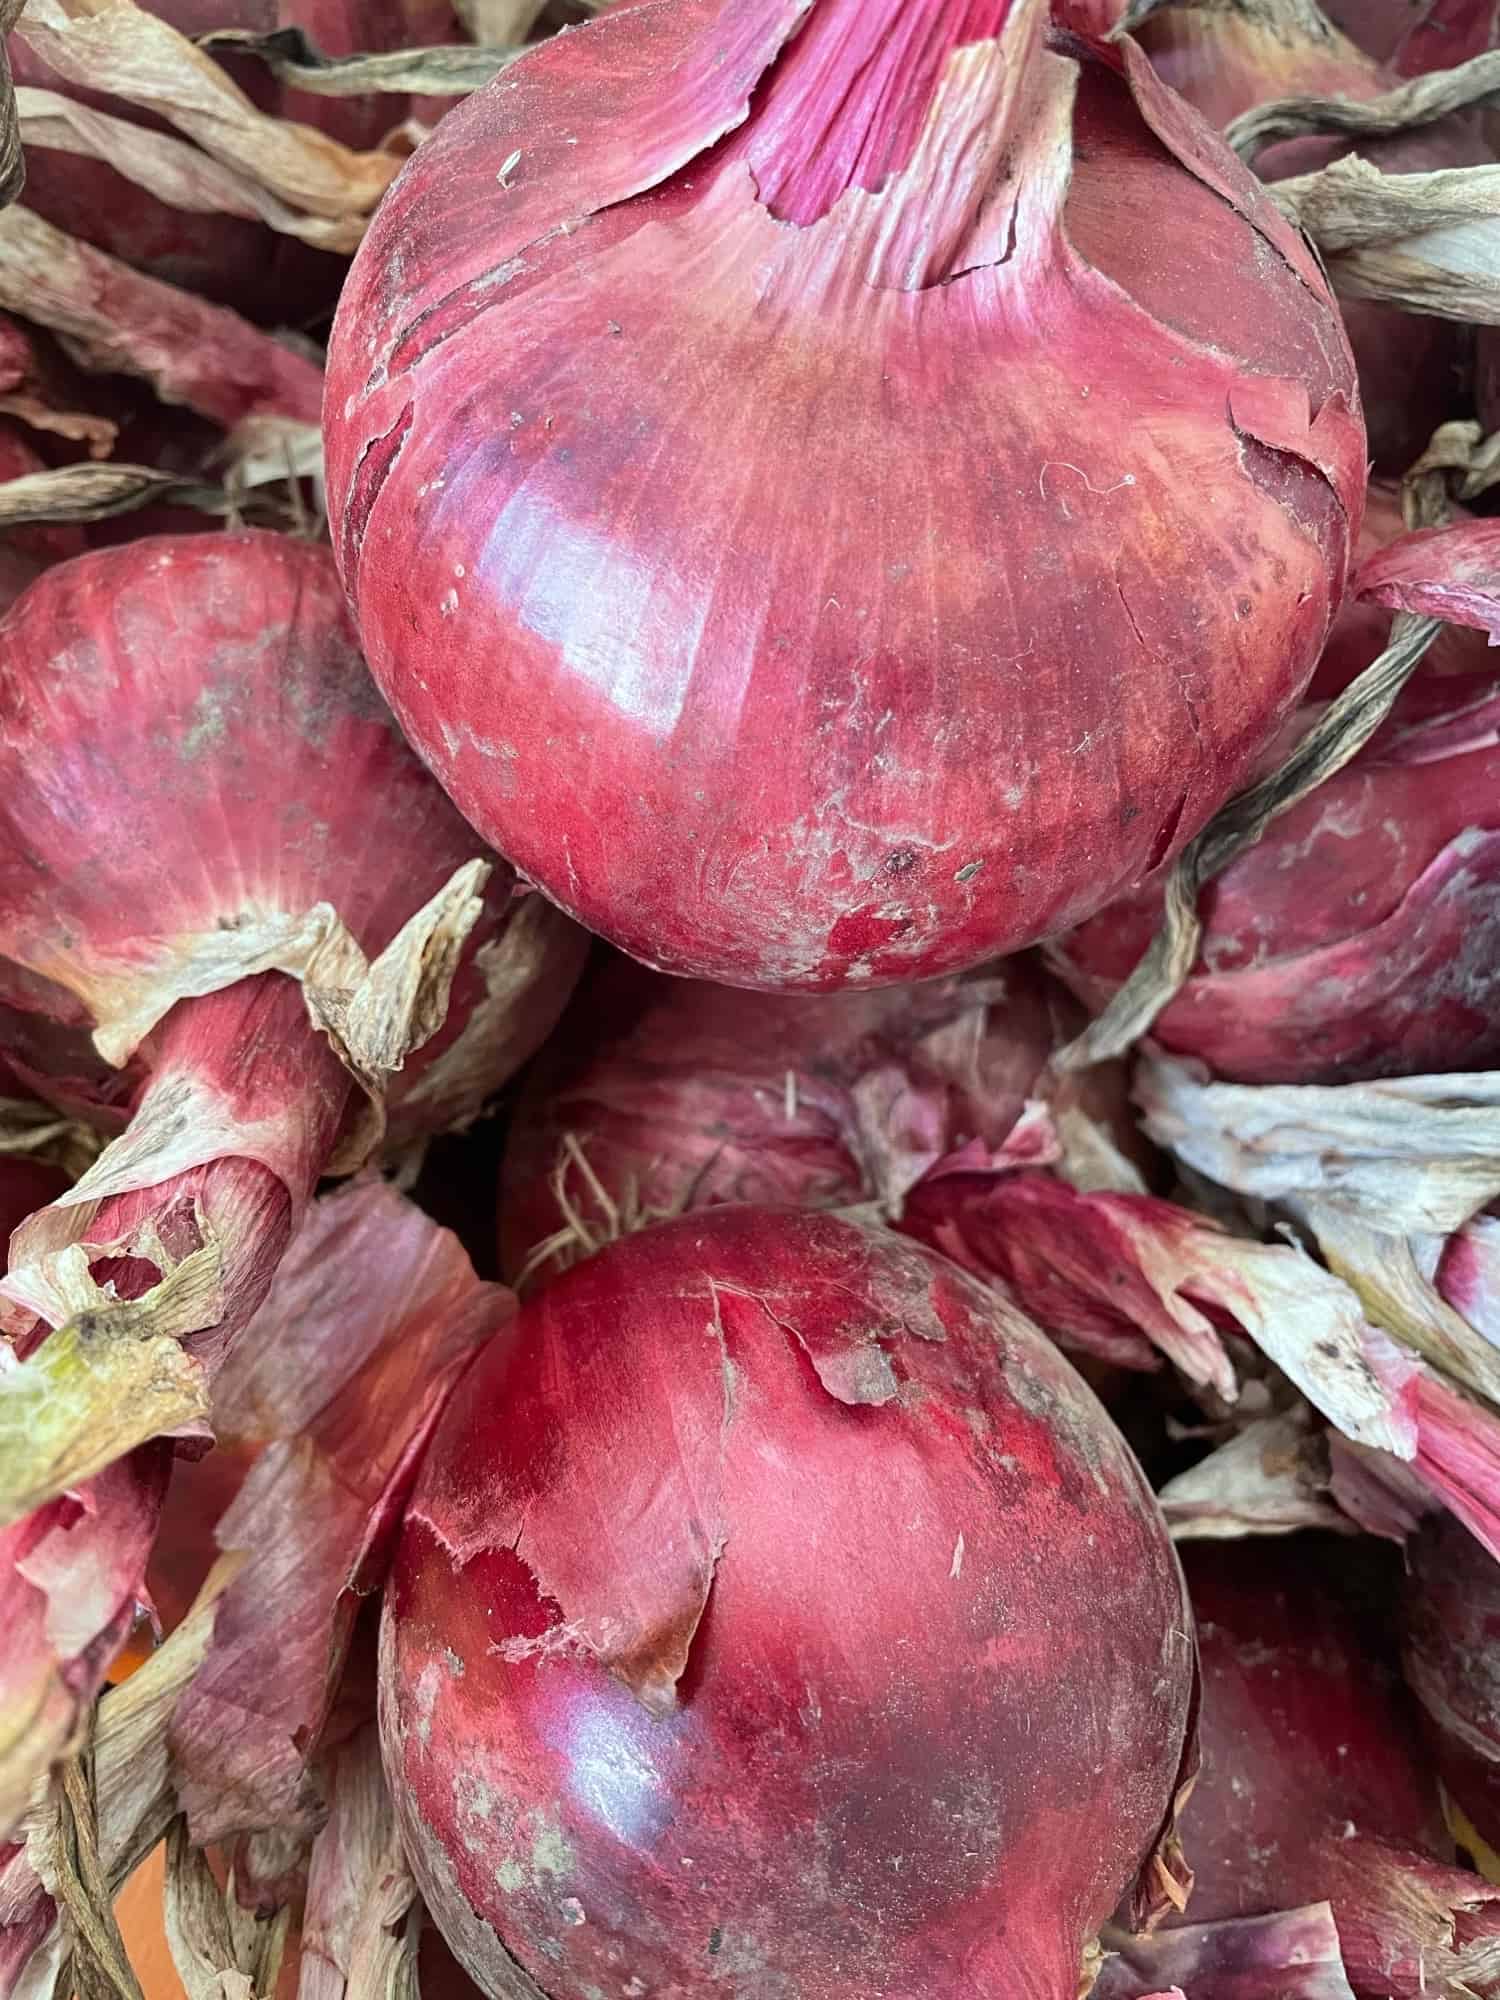 Large red spanish onion